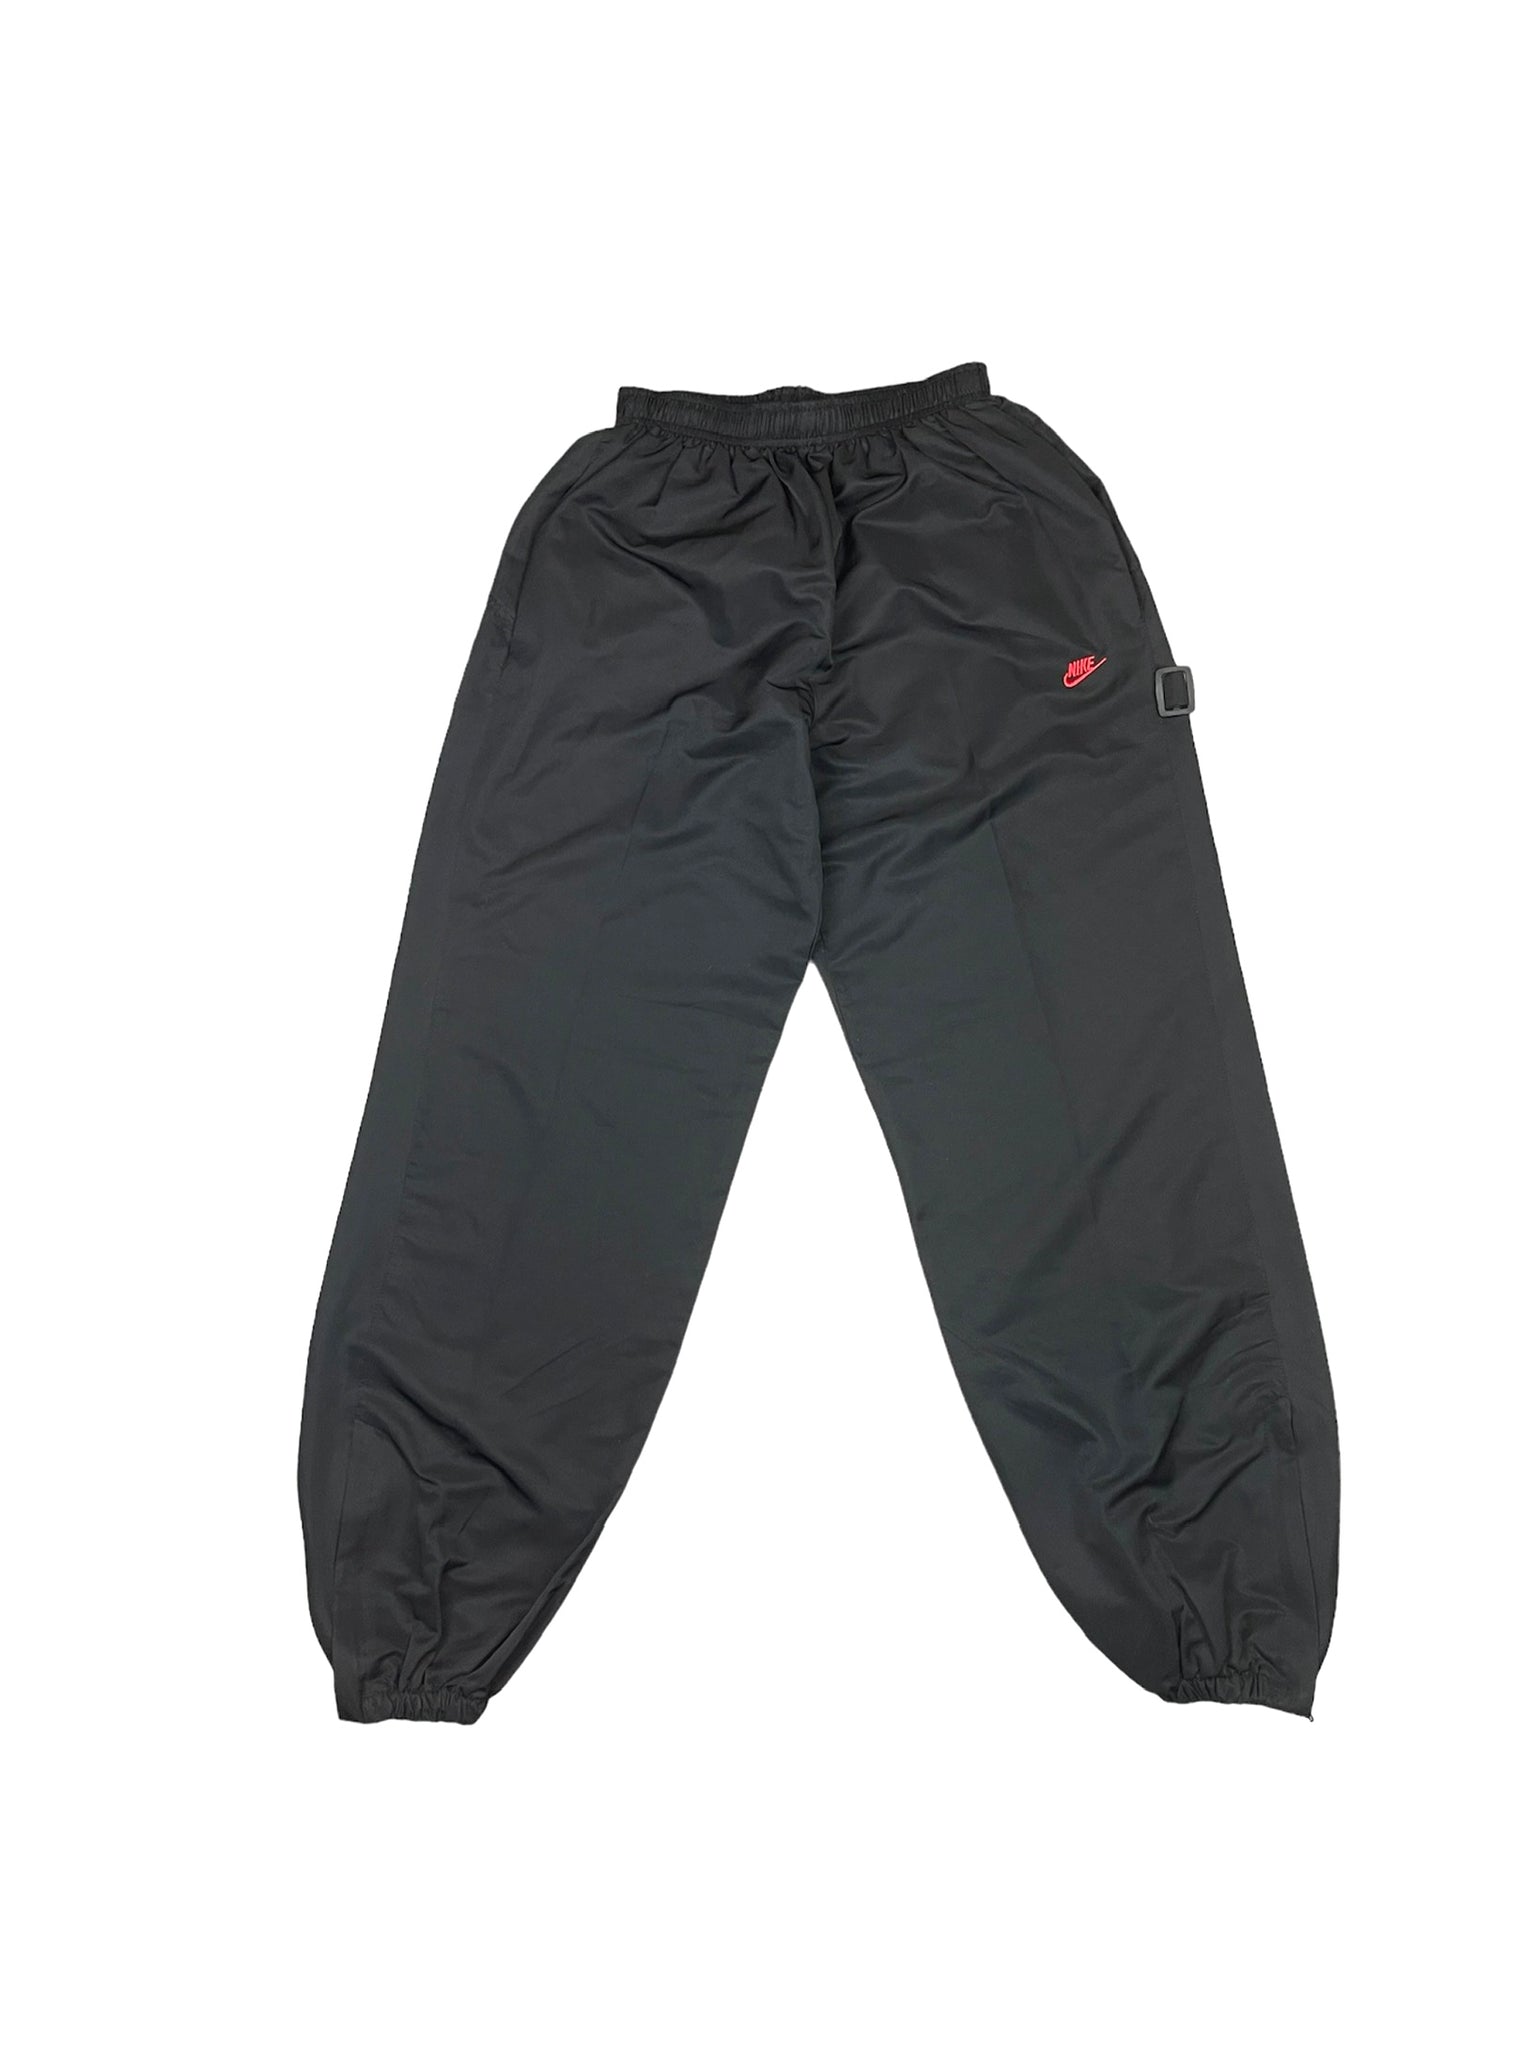 Parachute Pants Nike 